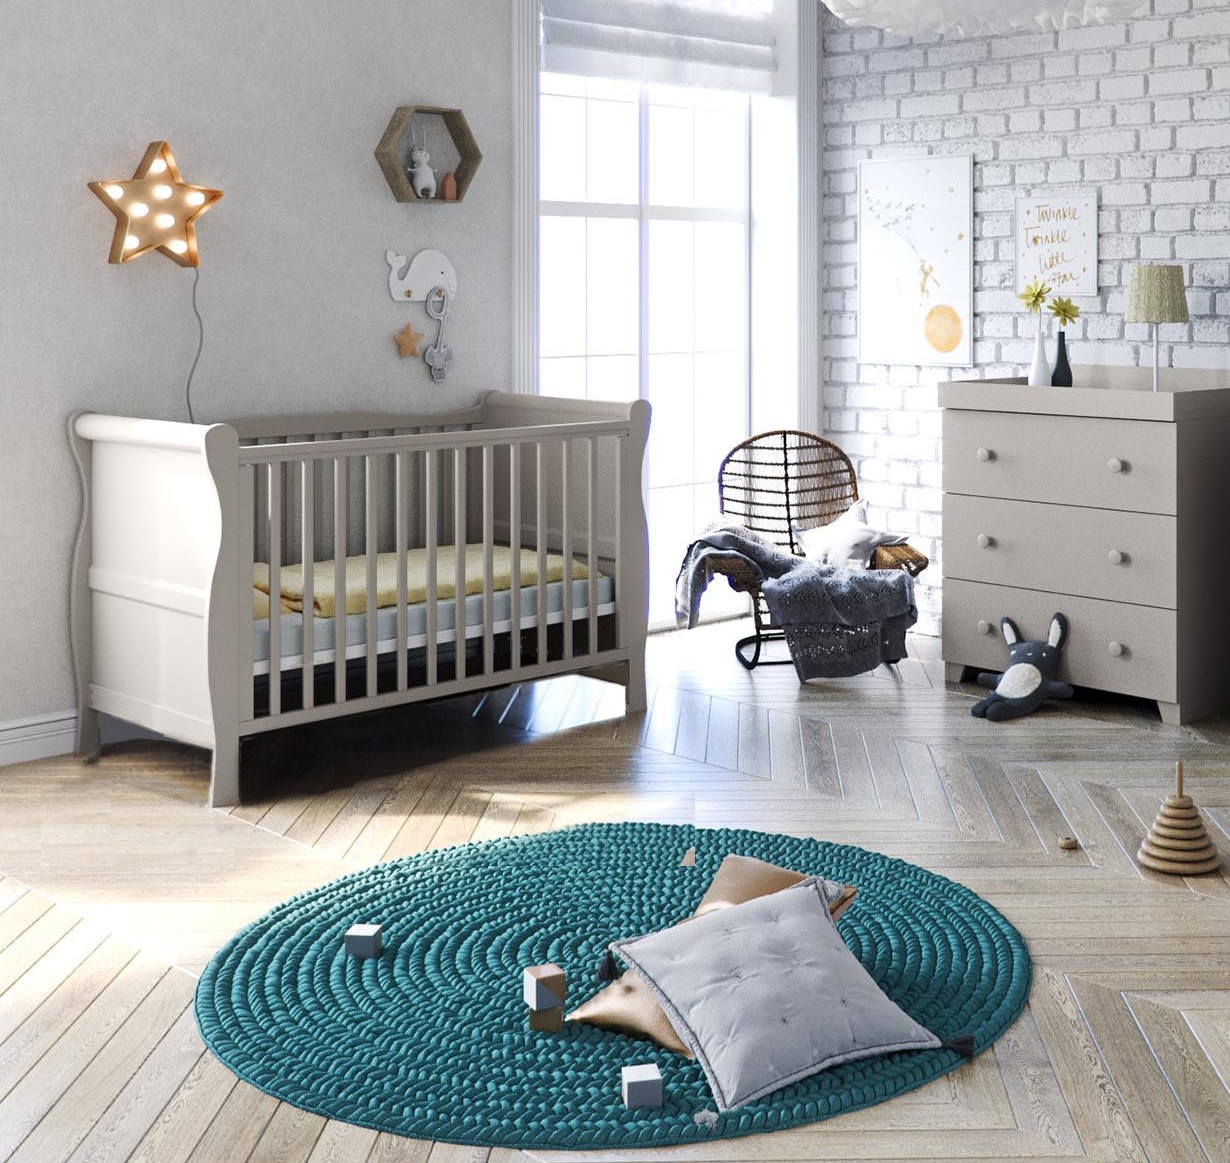 Little Acorns Sleigh Cot Bed 4 Piece Nursery Room Set With Deluxe 4inch Foam Mattress - Grey